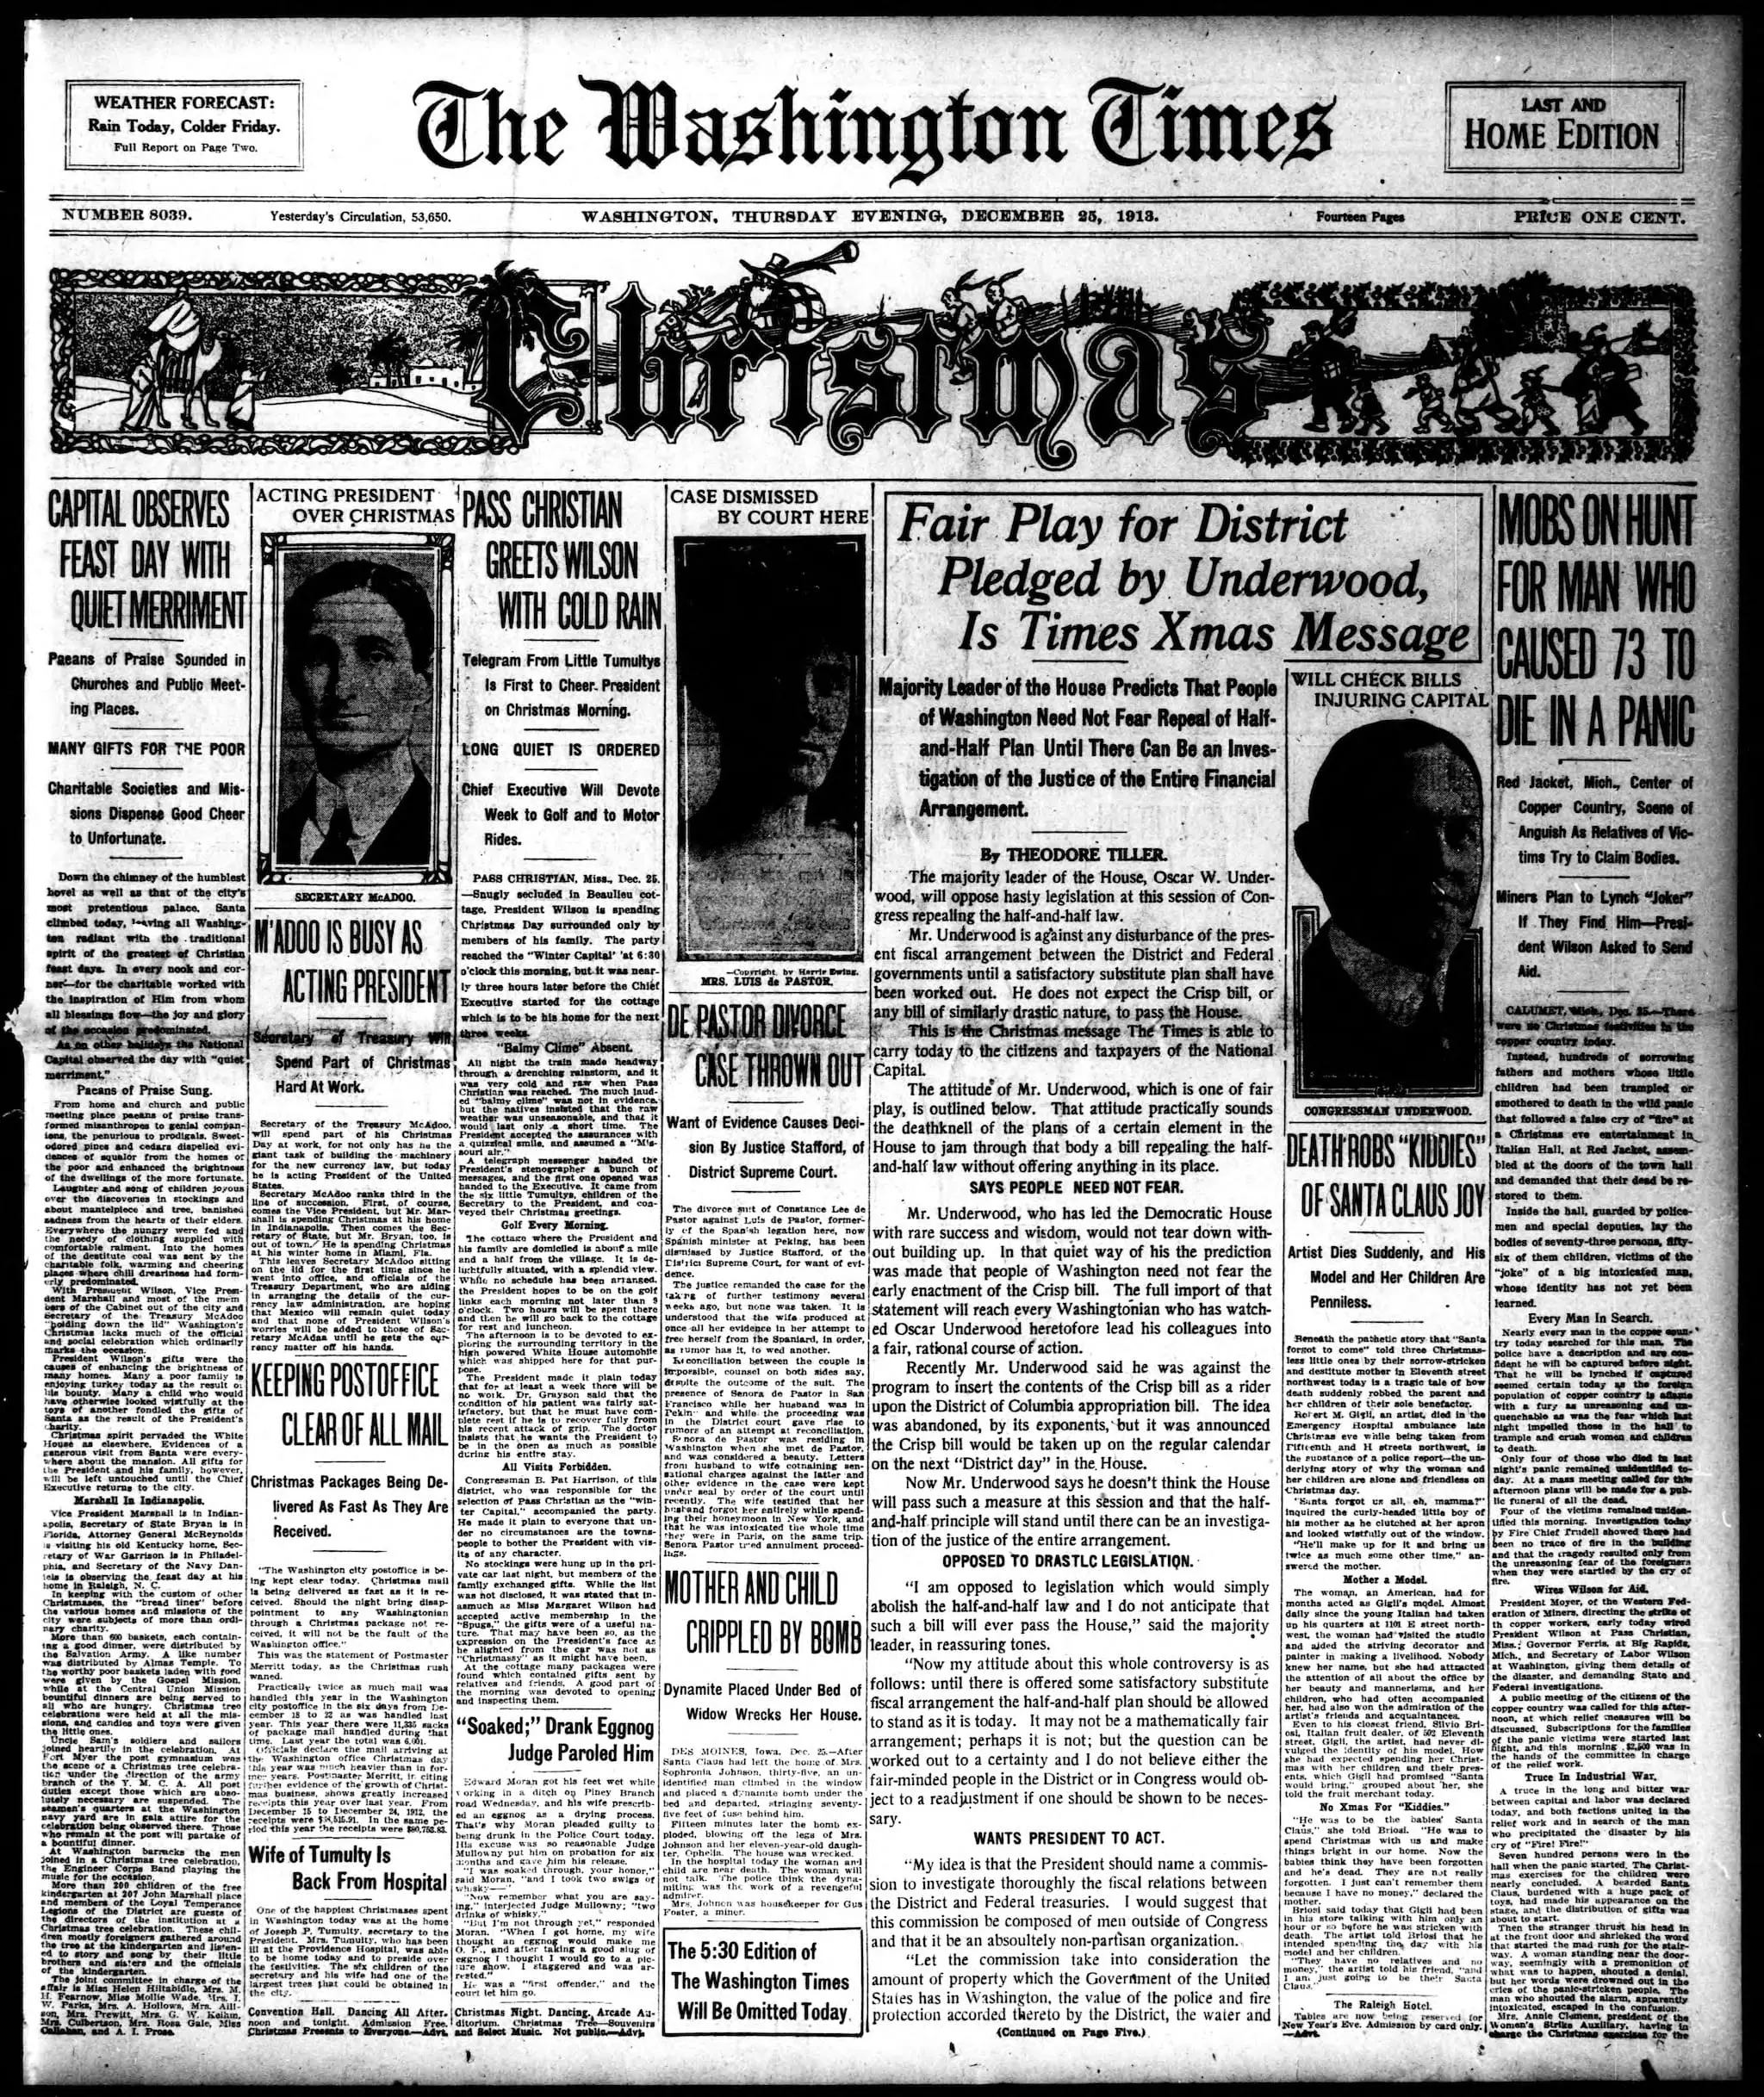 The Washington Times - 12/25/1913